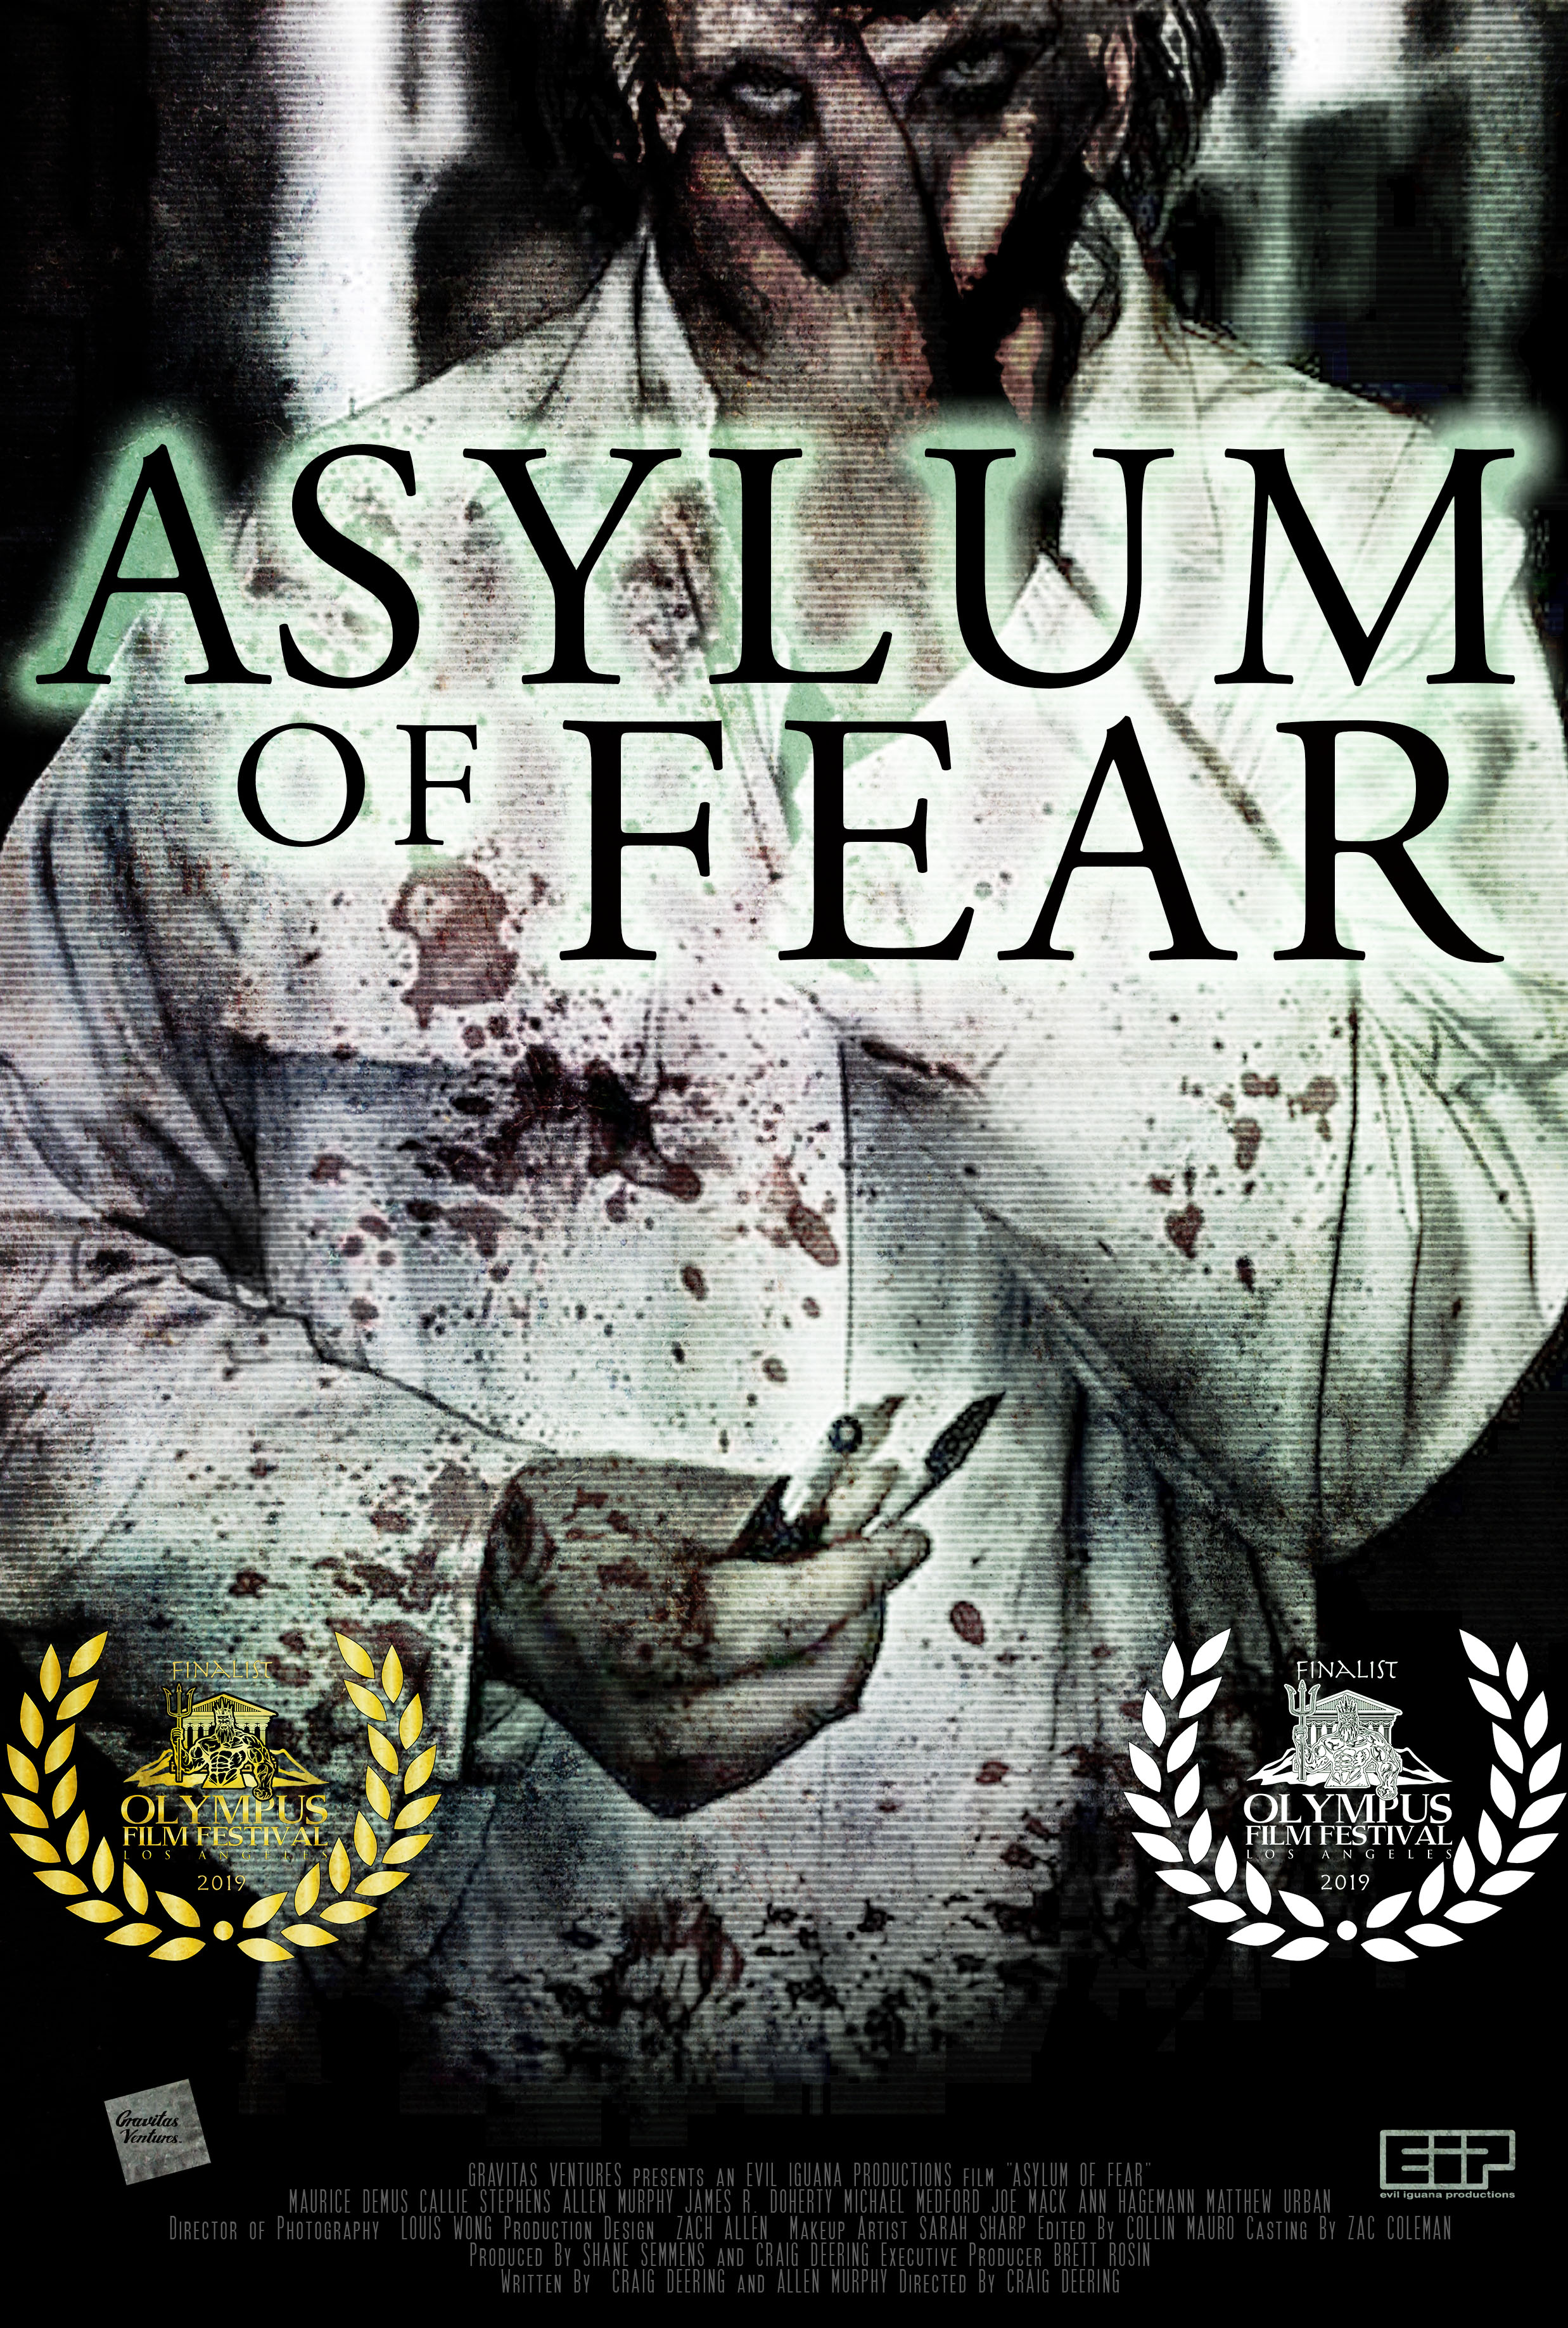 Nonton film Asylum of Fear layarkaca21 indoxx1 ganool online streaming terbaru